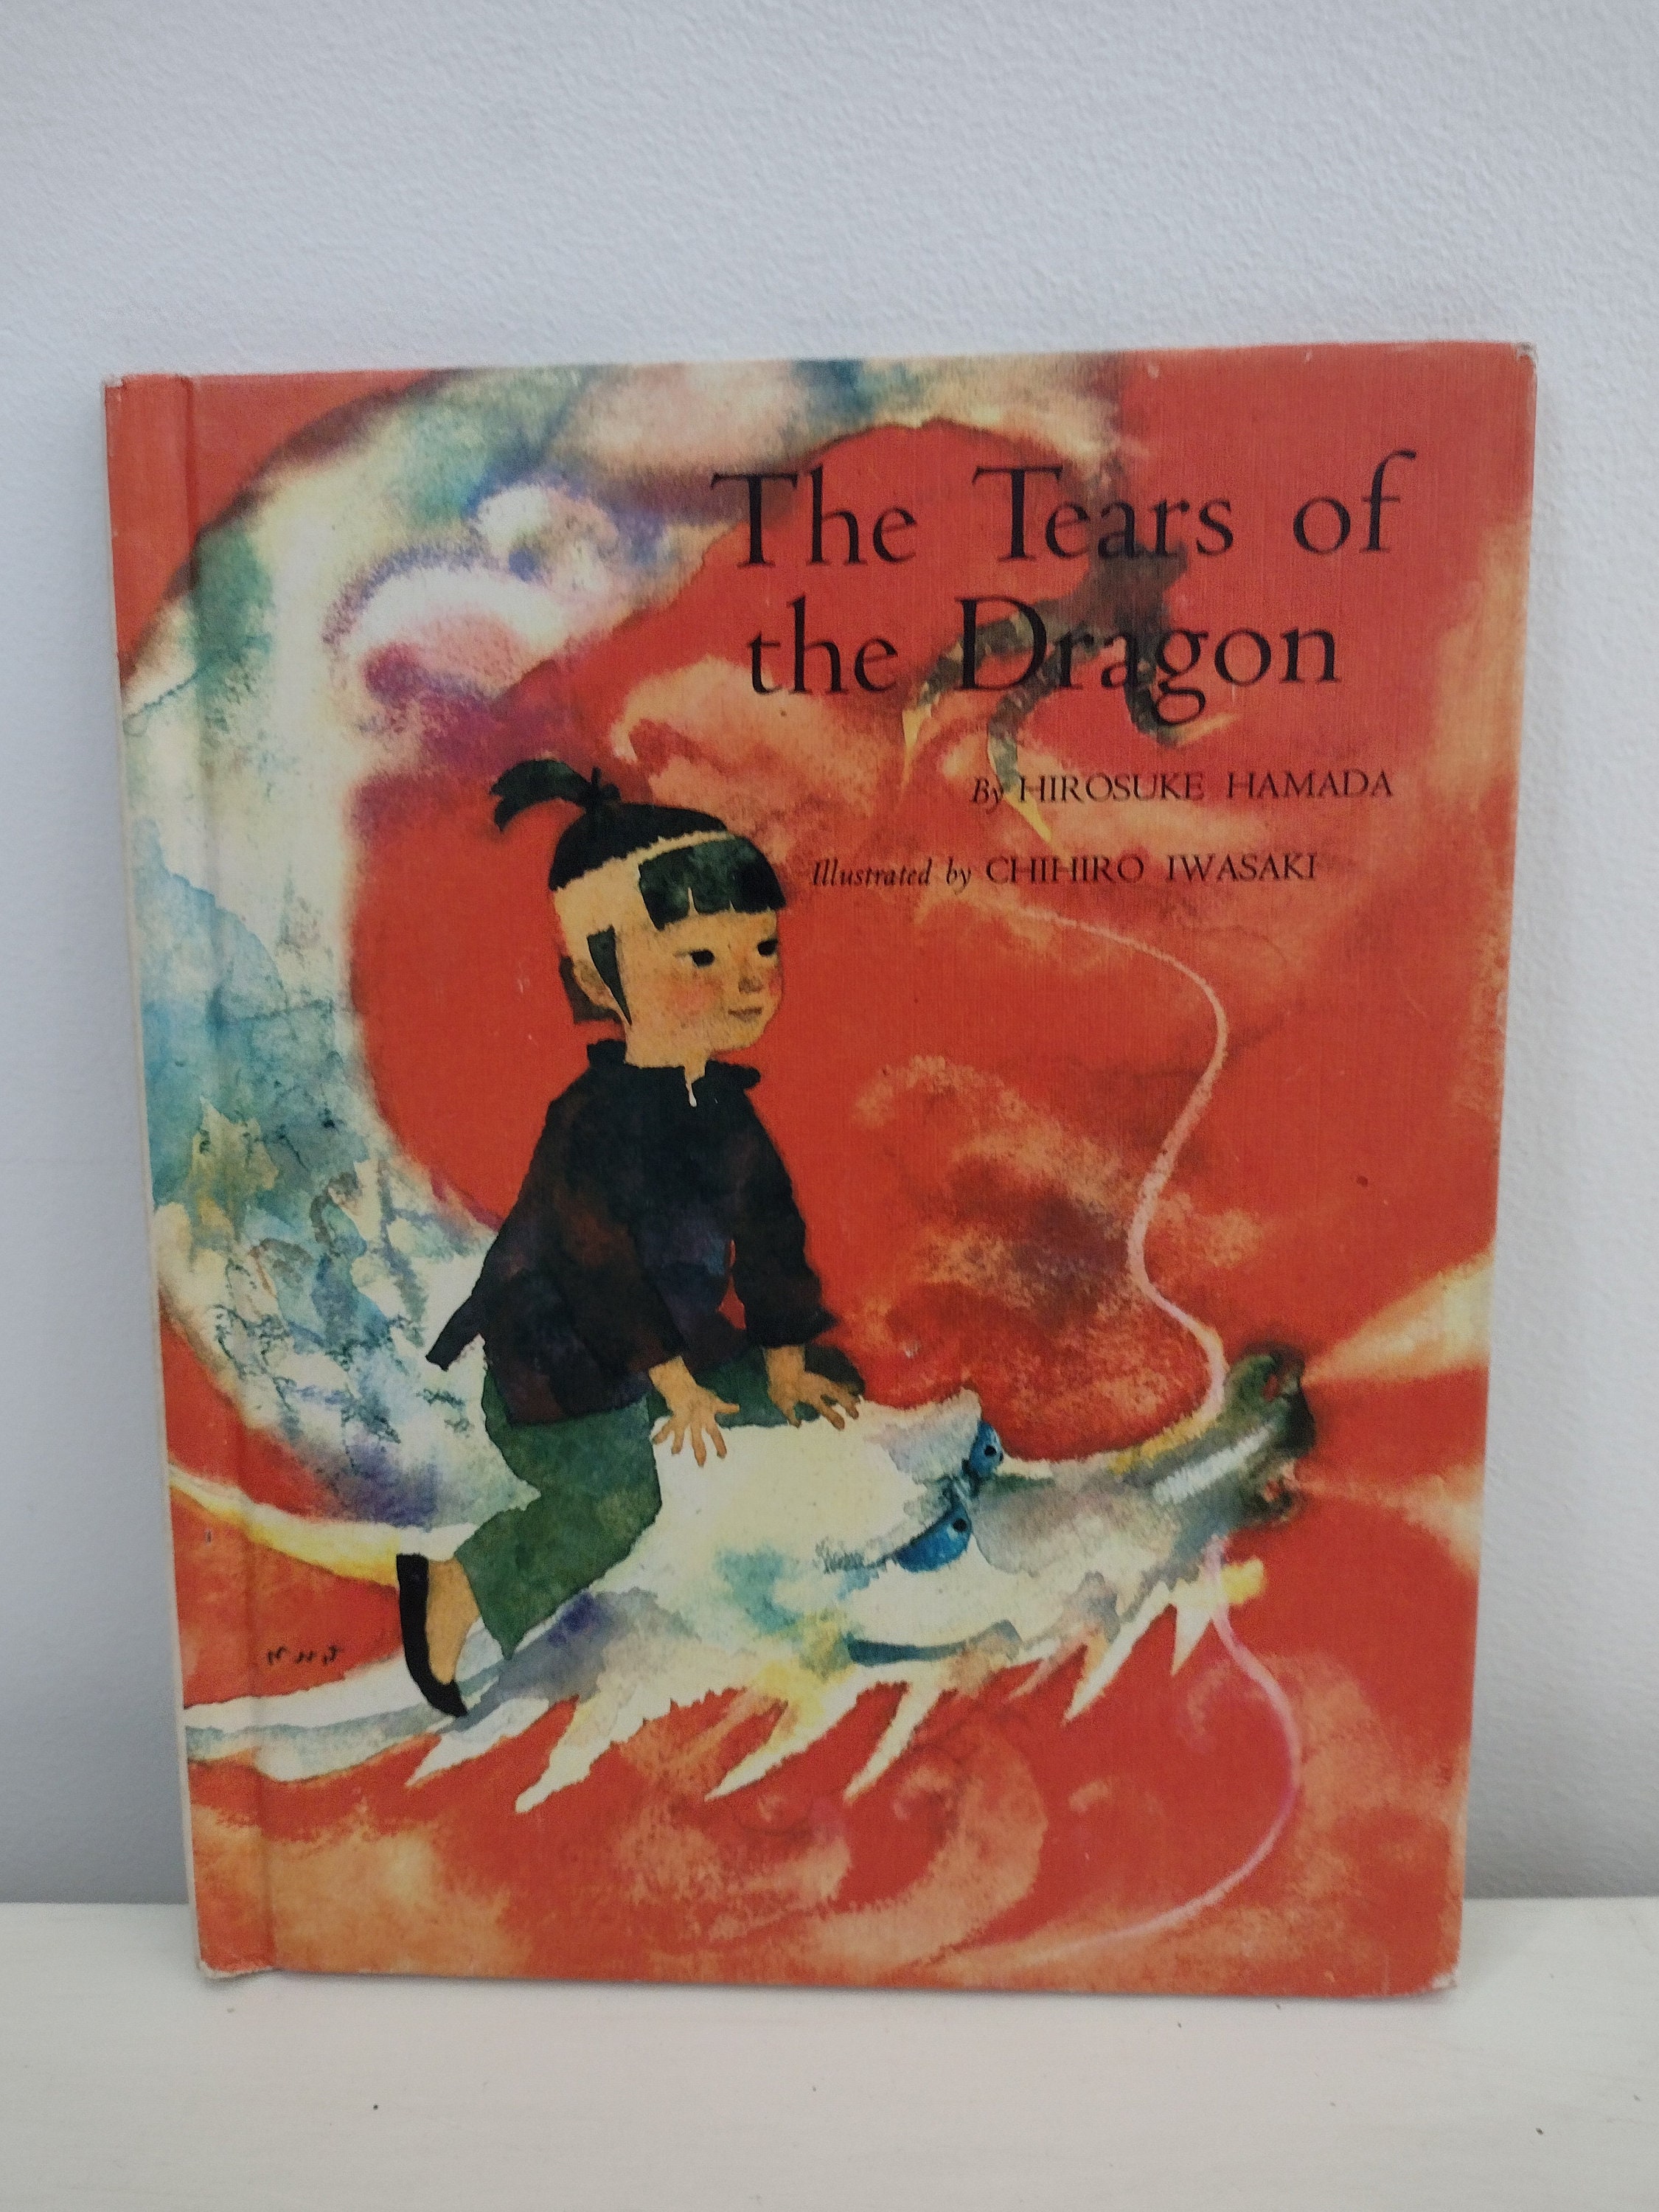 The Tears of the Dragon by Hirosuke Hamada